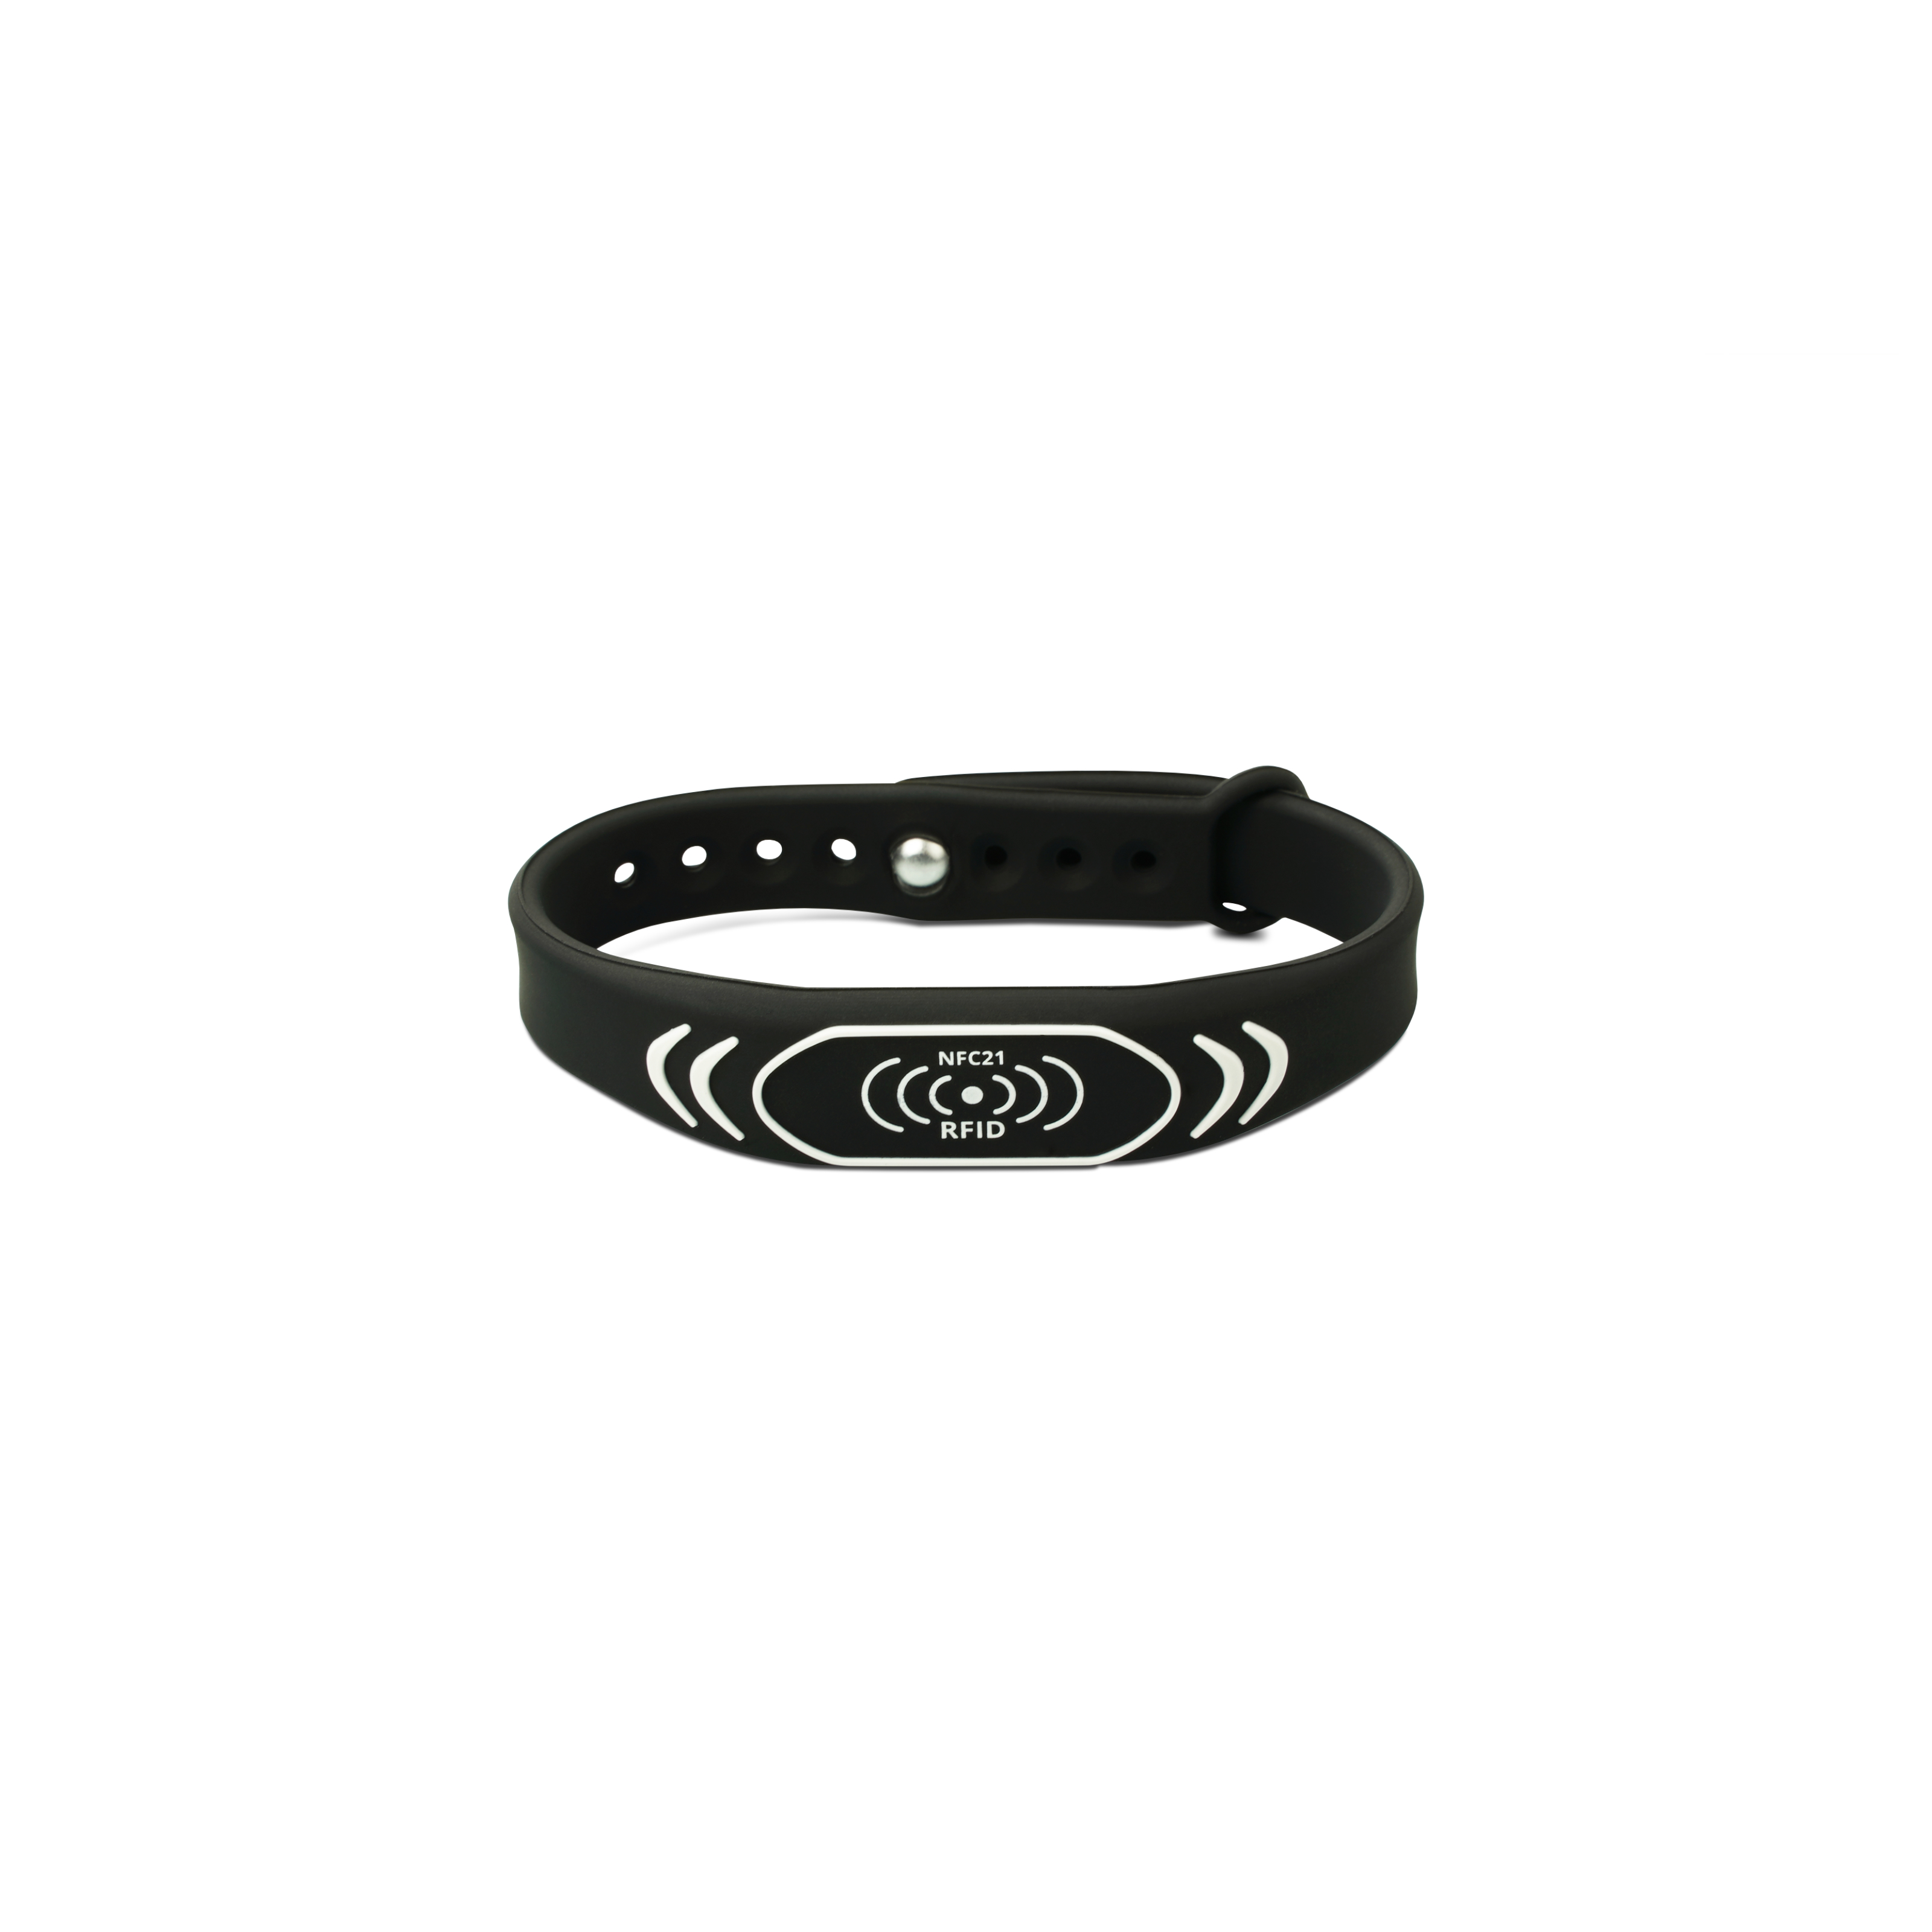 RFID wristband silicone - 235 mm x 15 mm - EM4200 - black - for locking systems